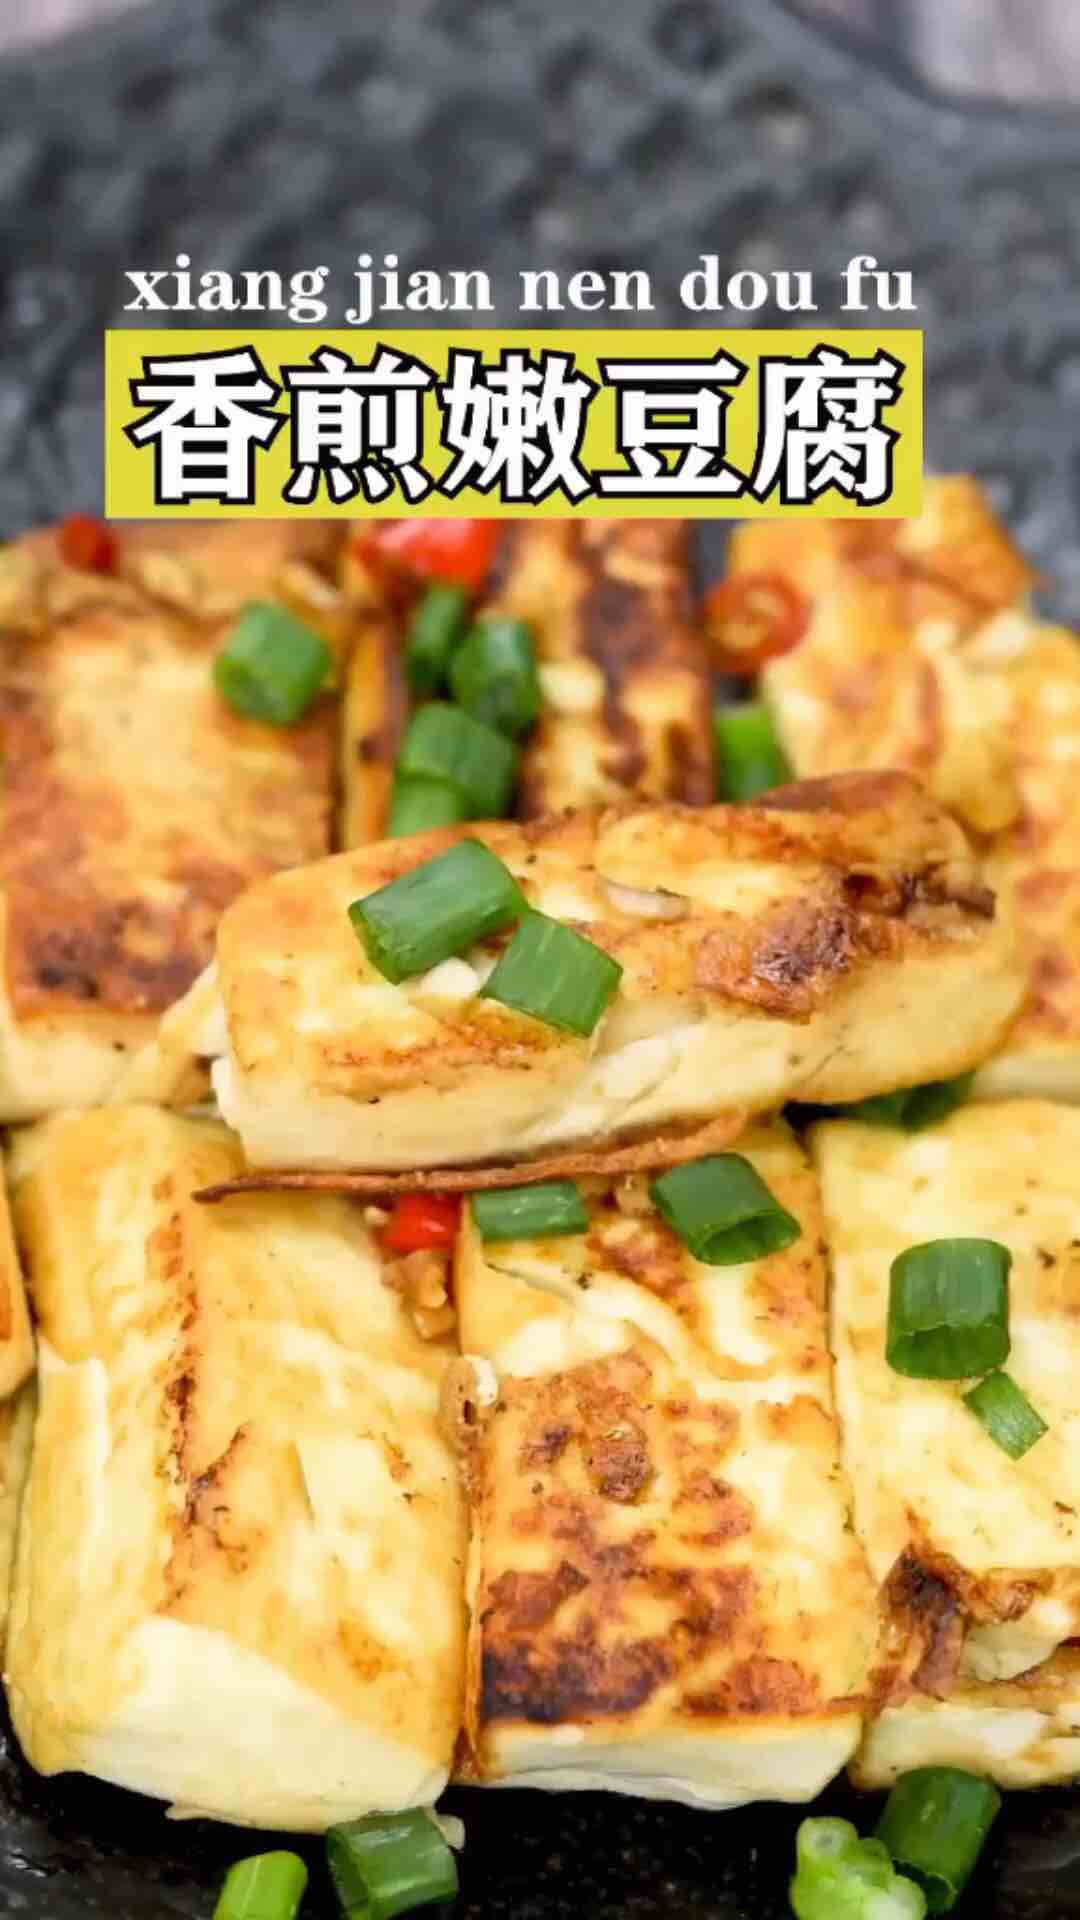 Pan-fried Soft Tofu recipe